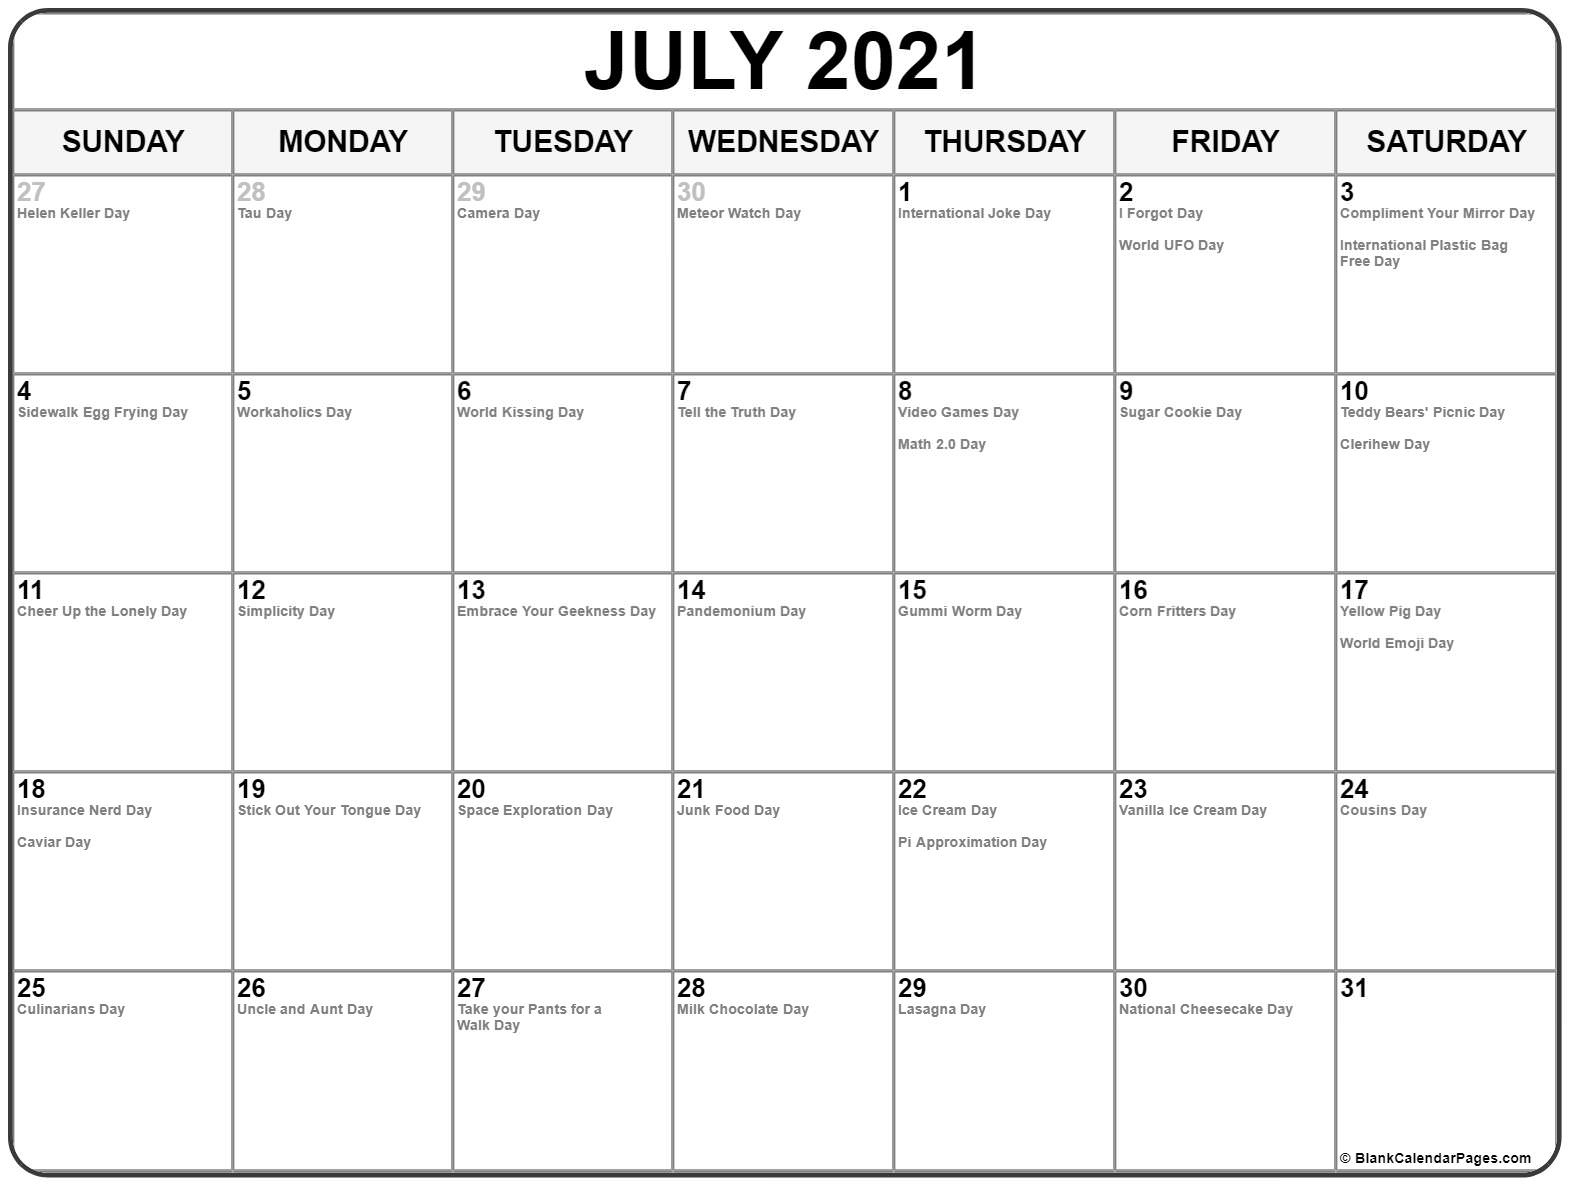 July 2021 Calendar With Holidays - Calendar Template 2021 July 2021 Calendar With Holidays